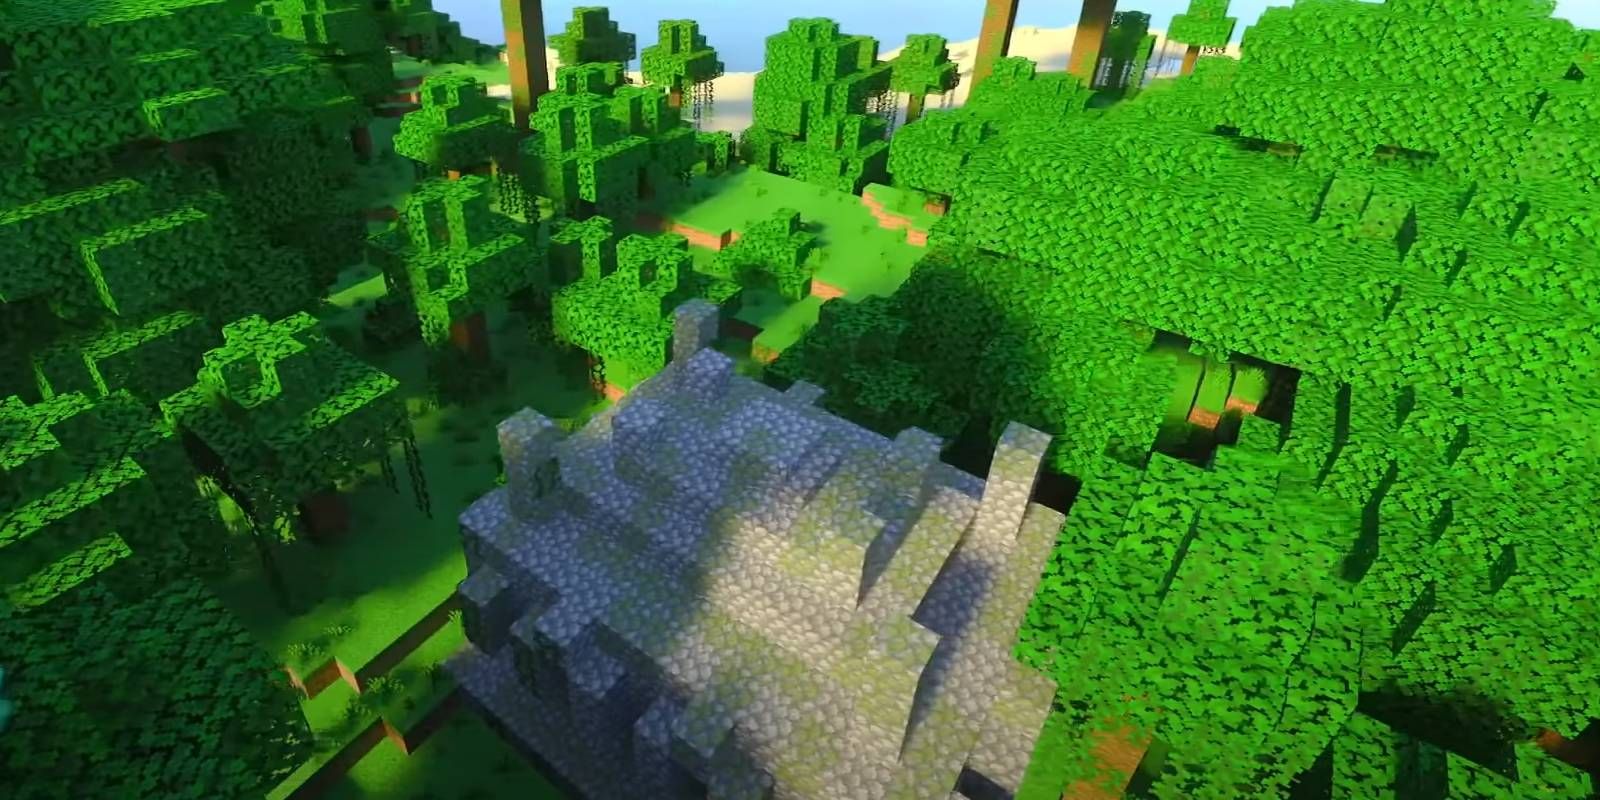 Minecraft Jungle Coast from Survival World Seed